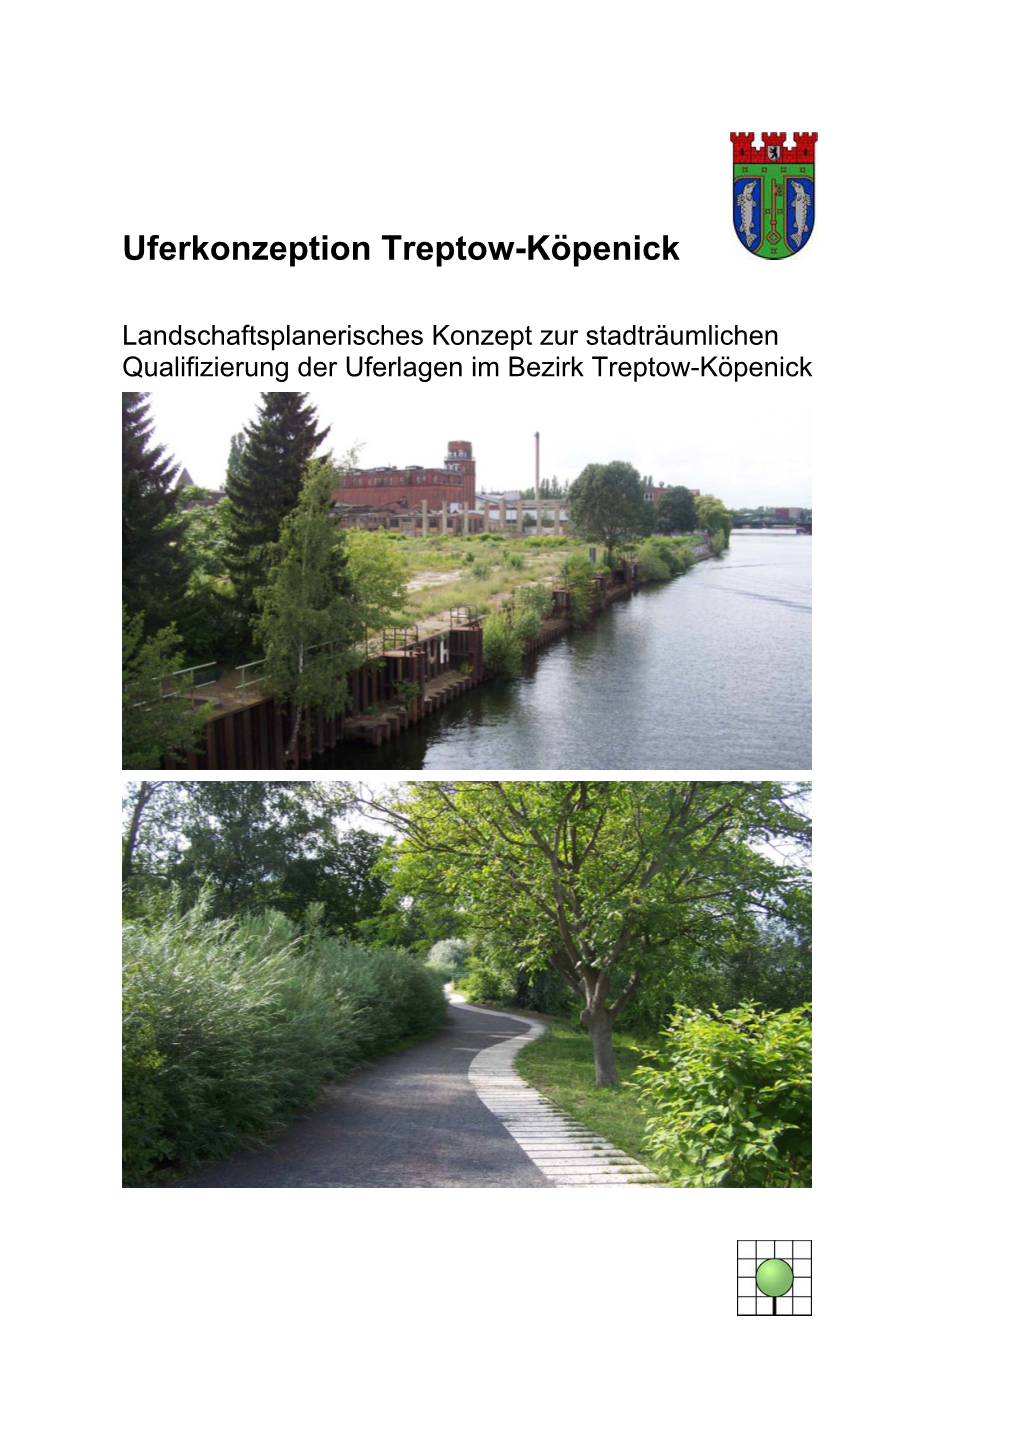 Uferkonzeption Treptow-Köpenick